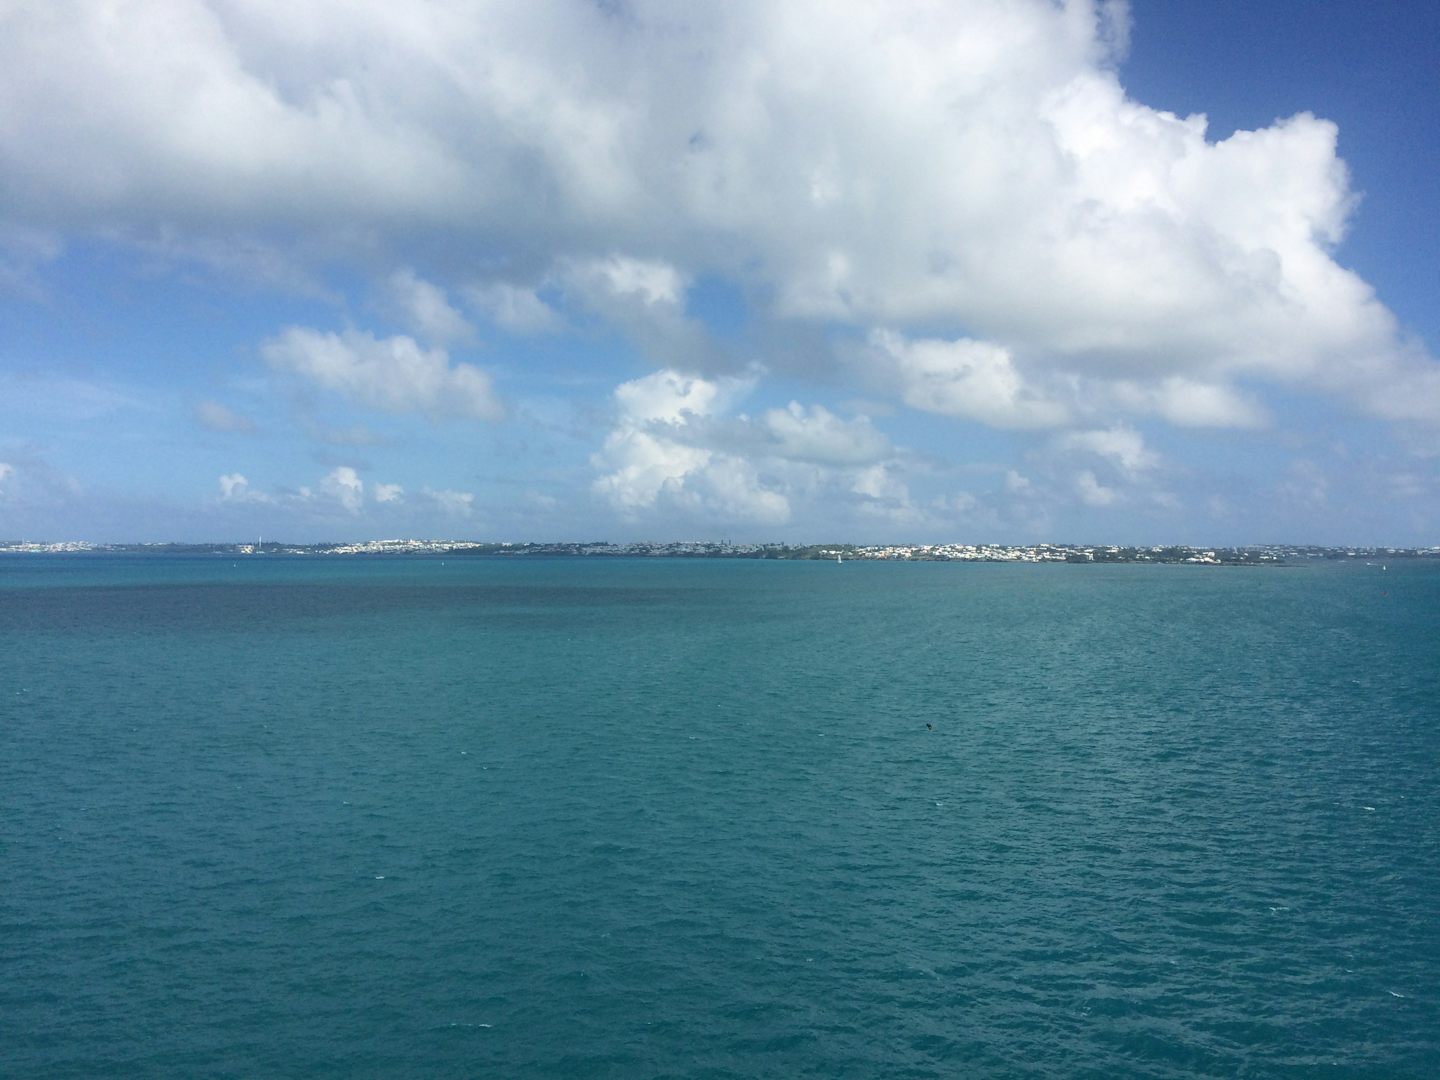 Sailing away from bermuda